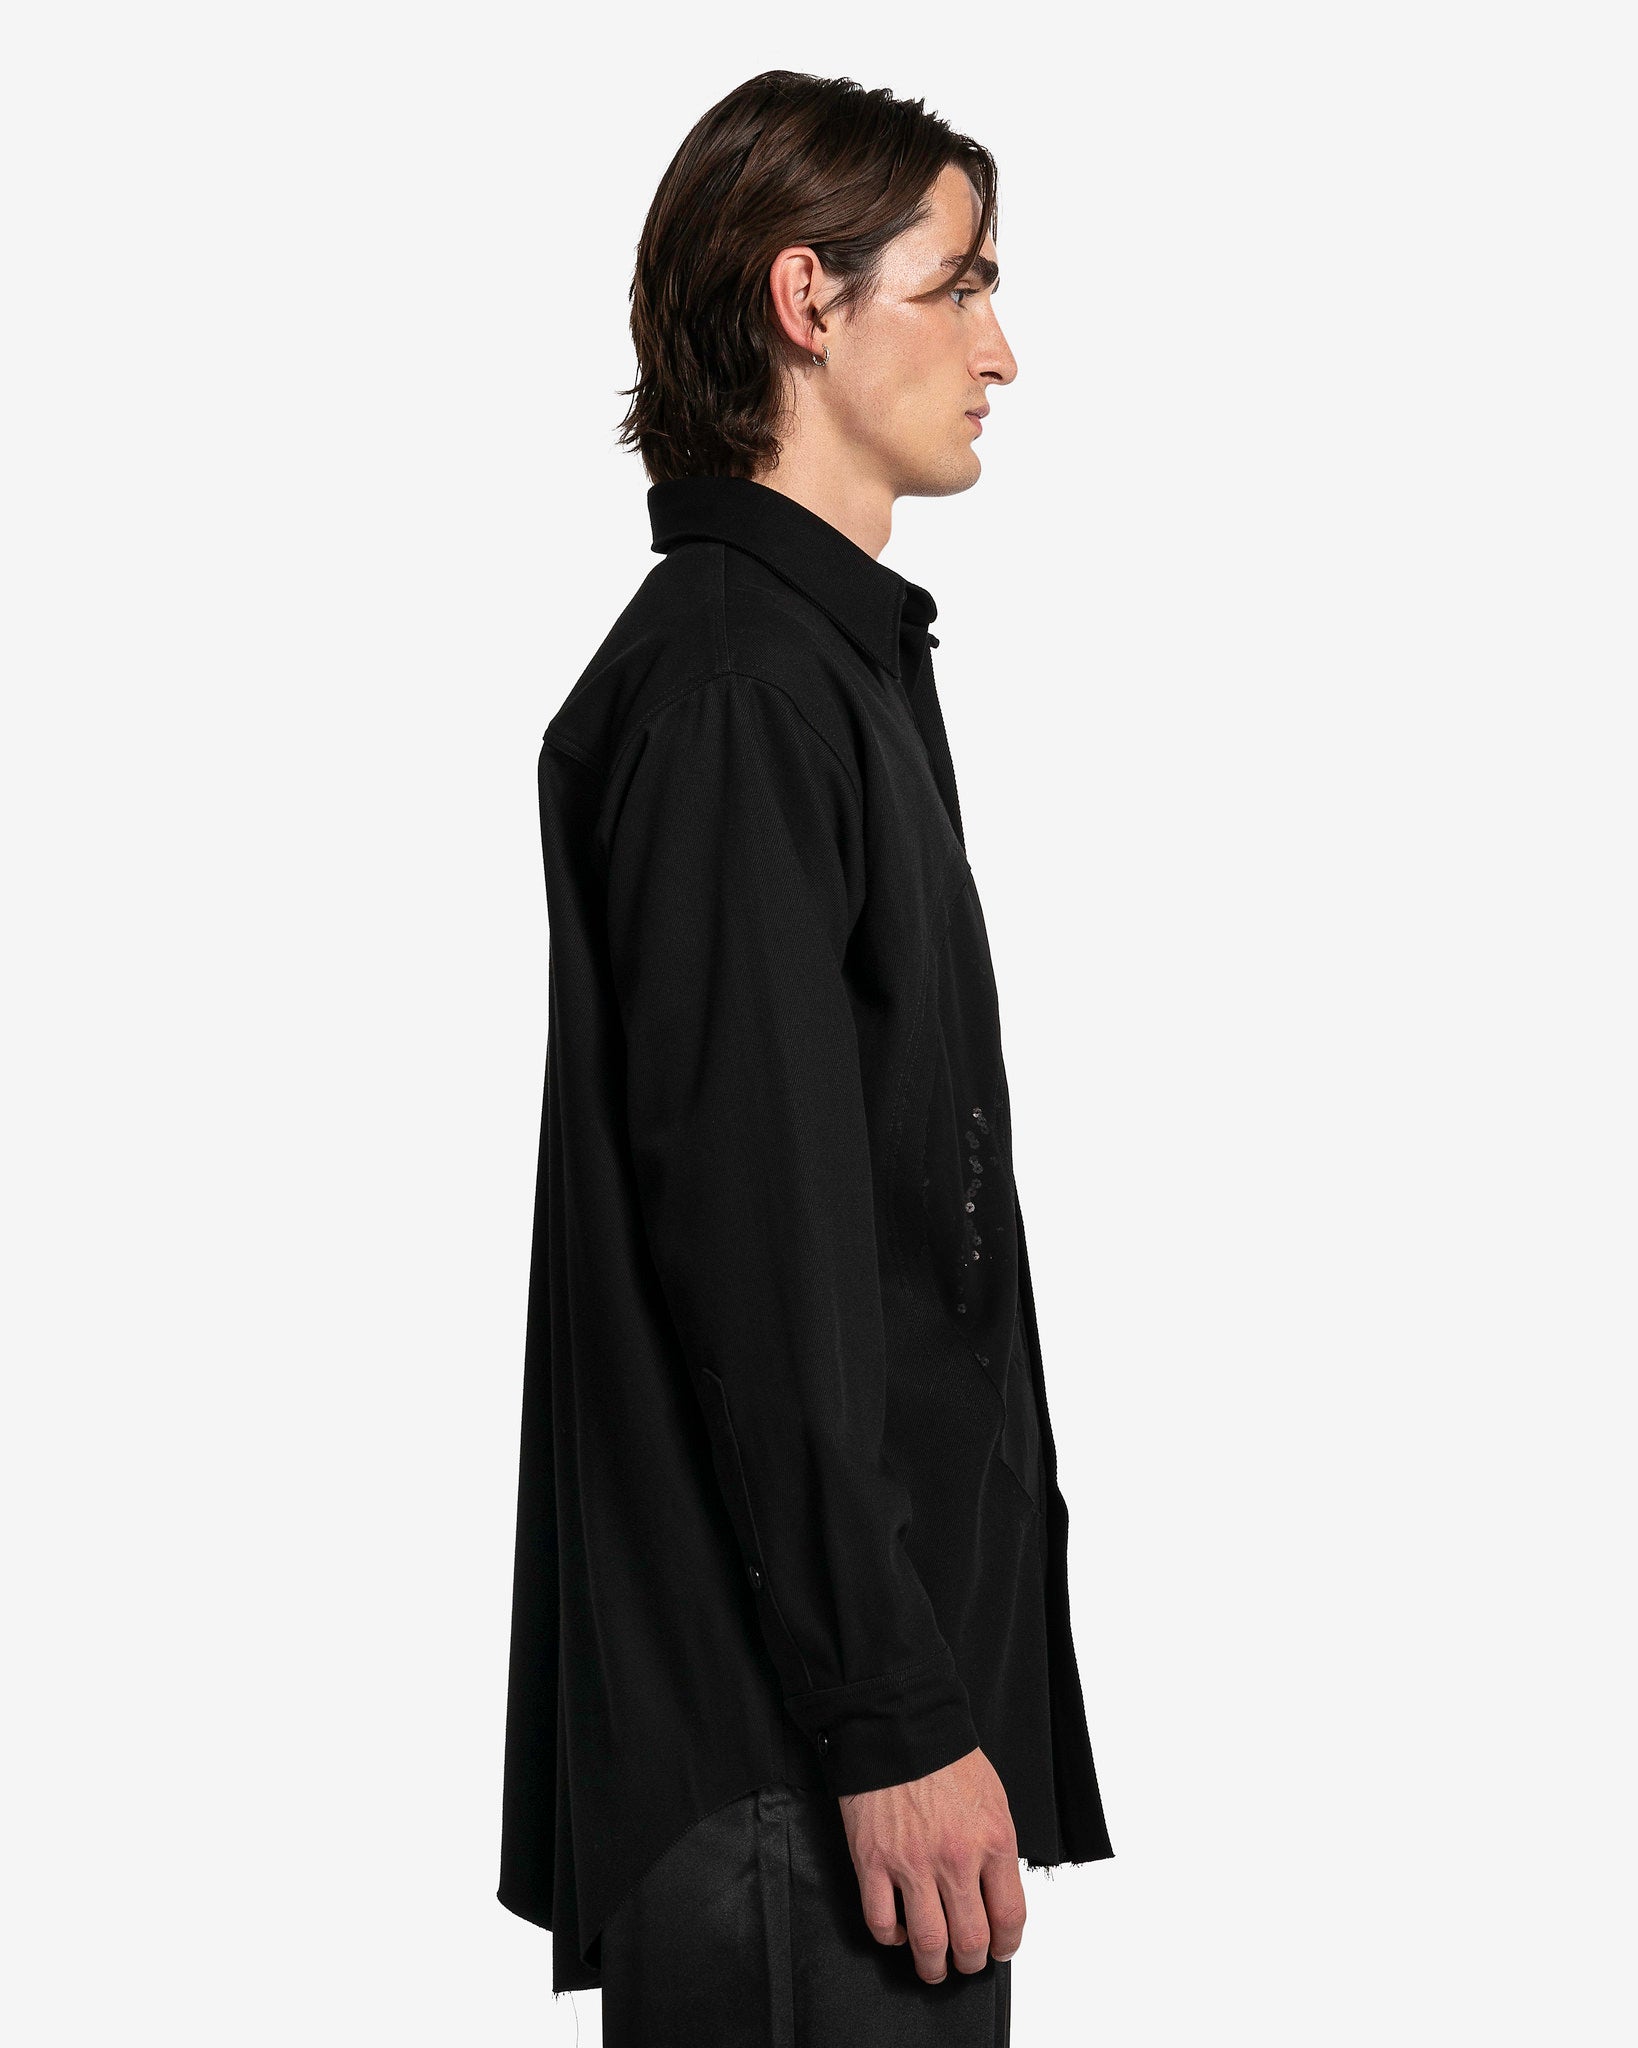 Edward Cuming Men's Shirts Vortex Shirt in Black